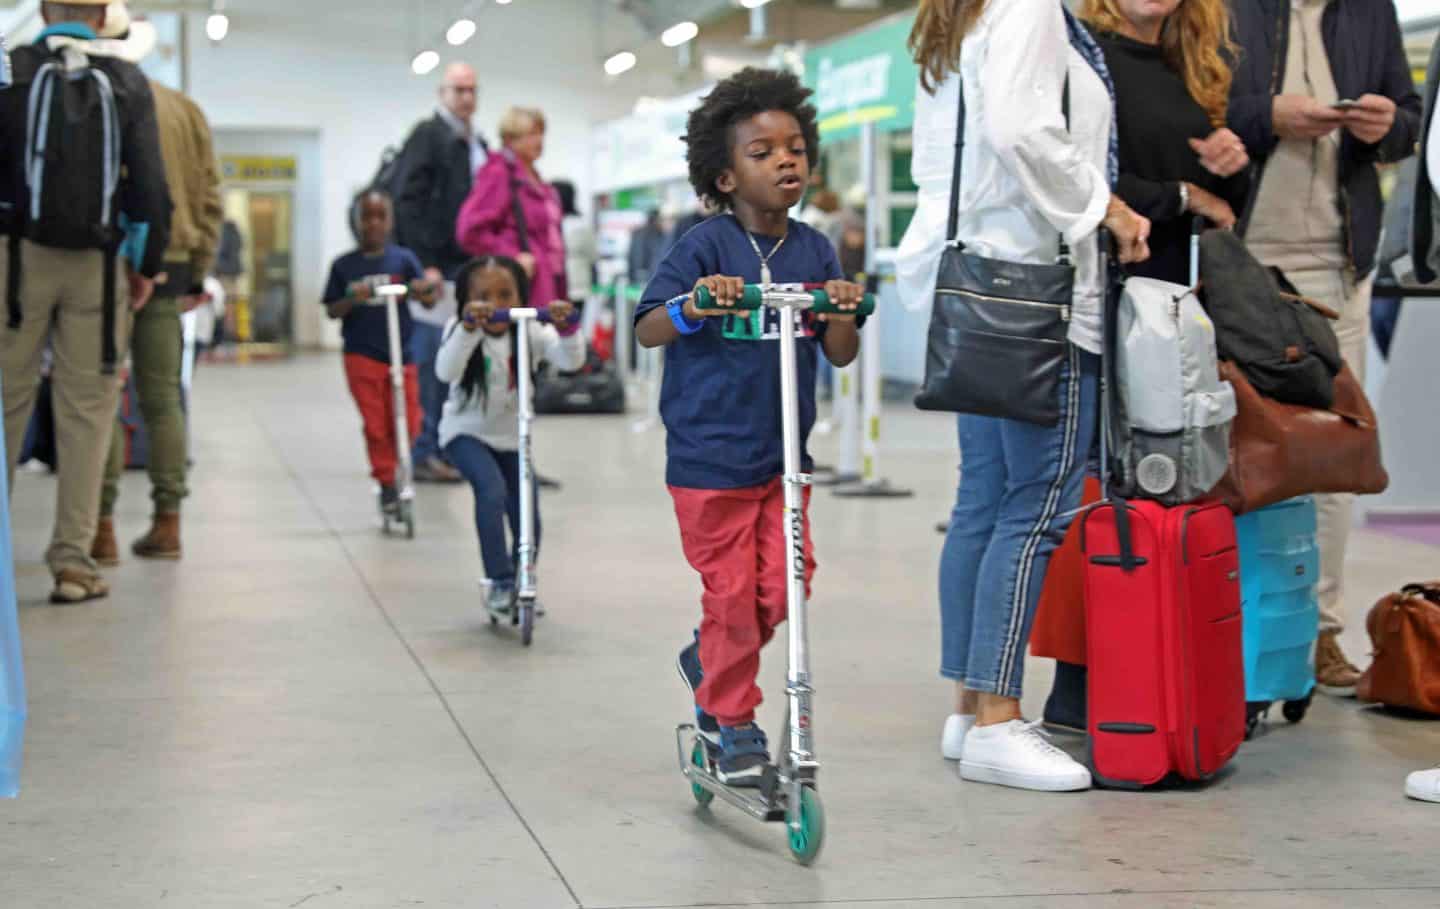 Black kids on scooter